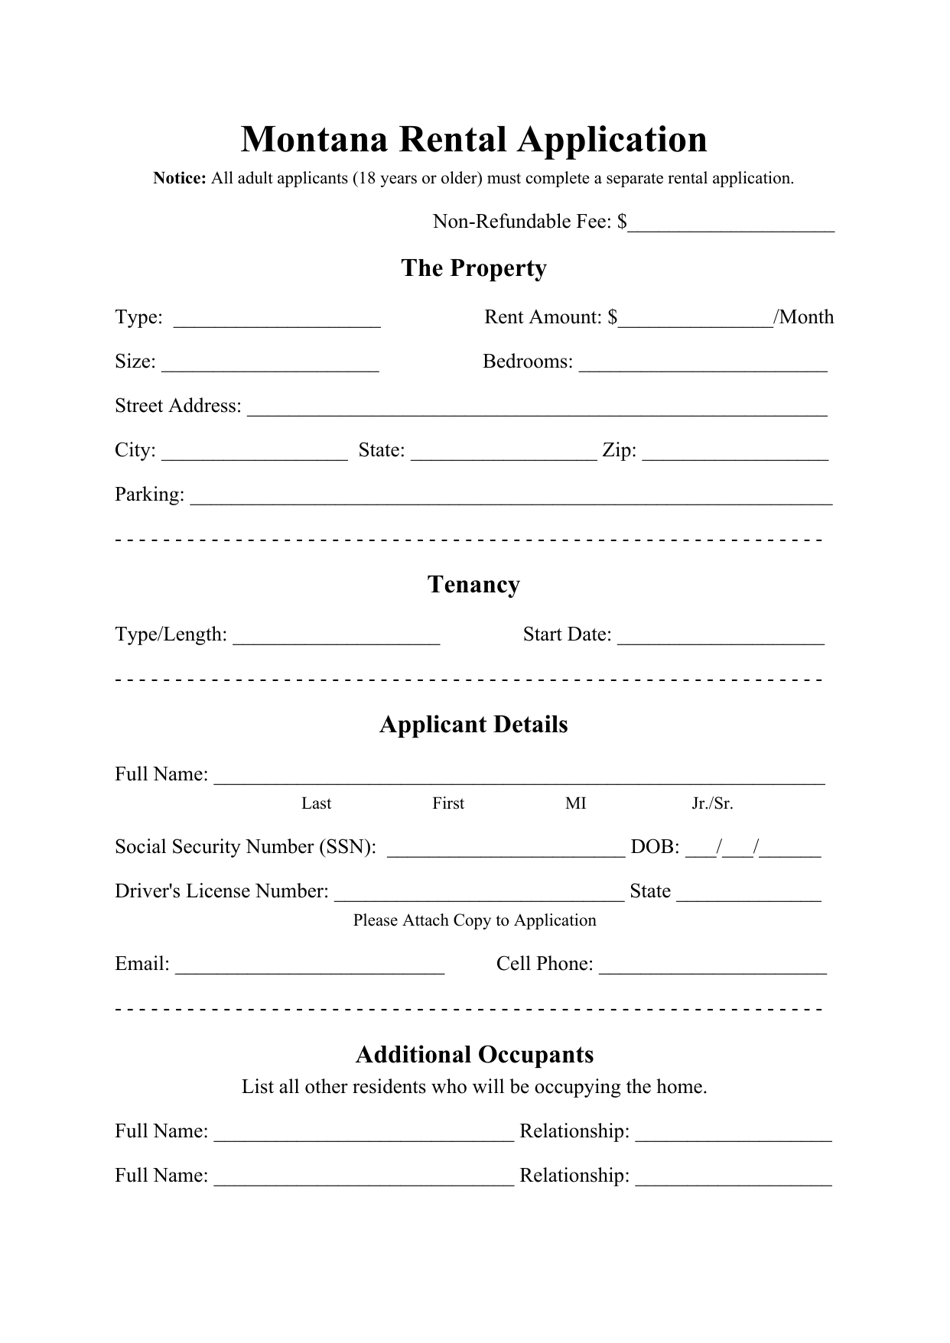 Rental Application Form - Montana, Page 1